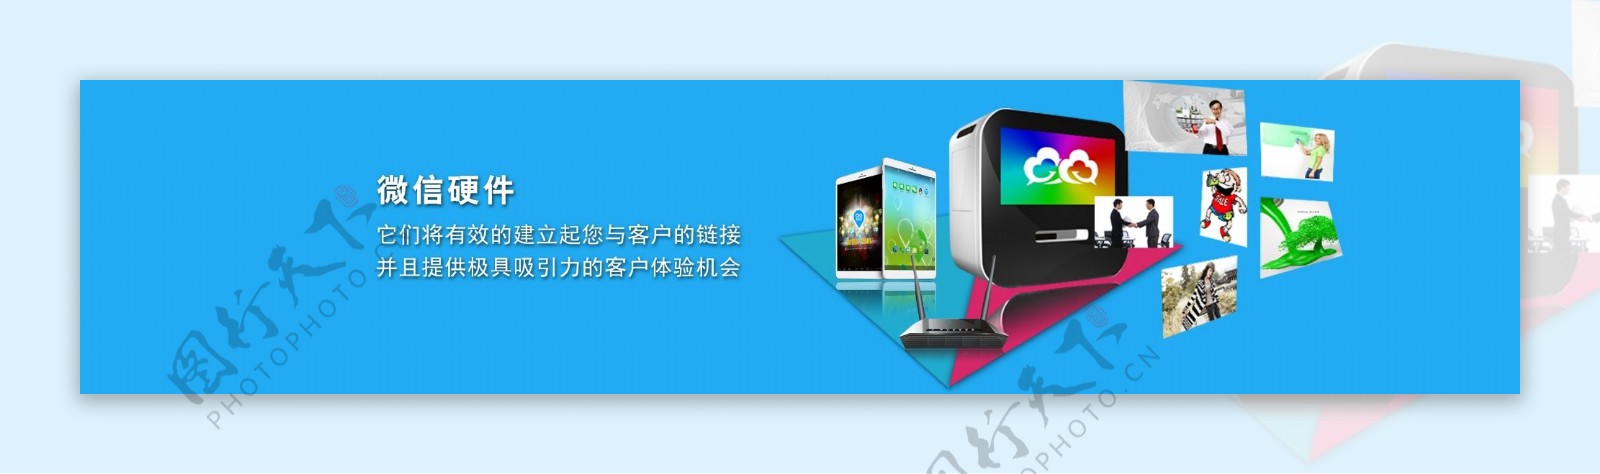 网站banner微信硬件广告图片